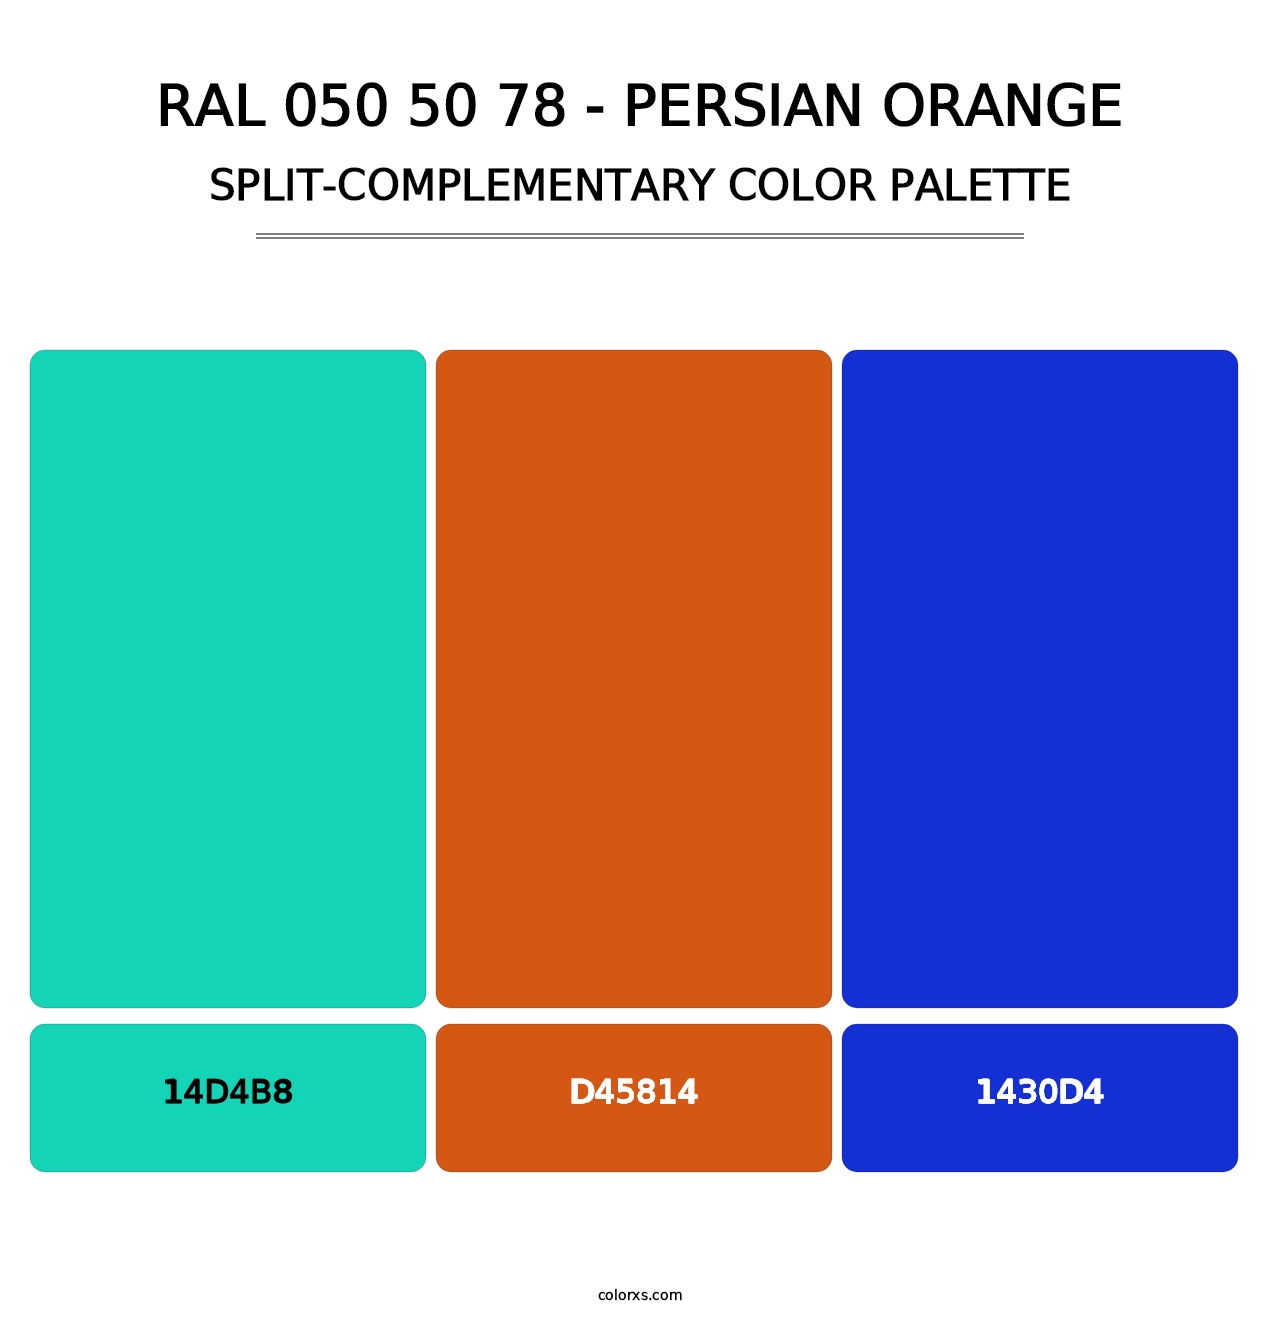 RAL 050 50 78 - Persian Orange - Split-Complementary Color Palette